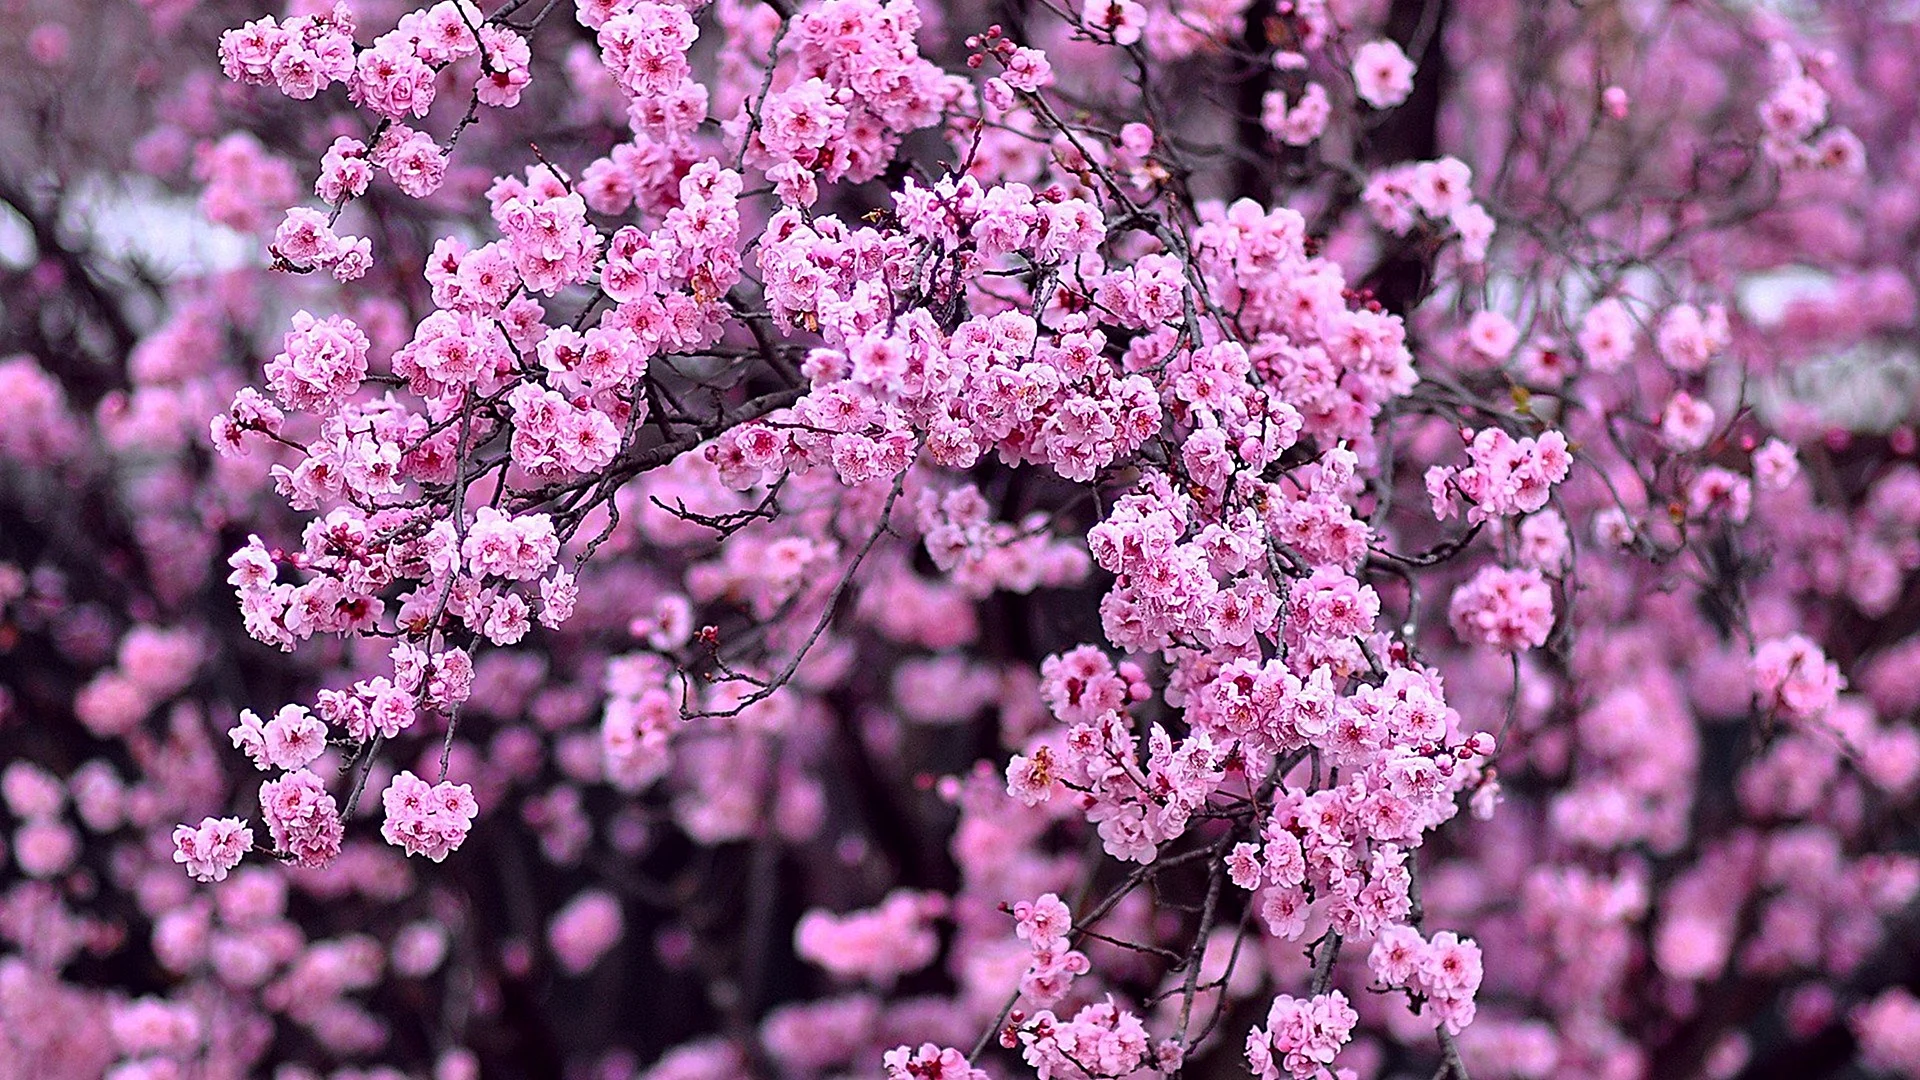 Pink Cherry Blossoms Wallpaper